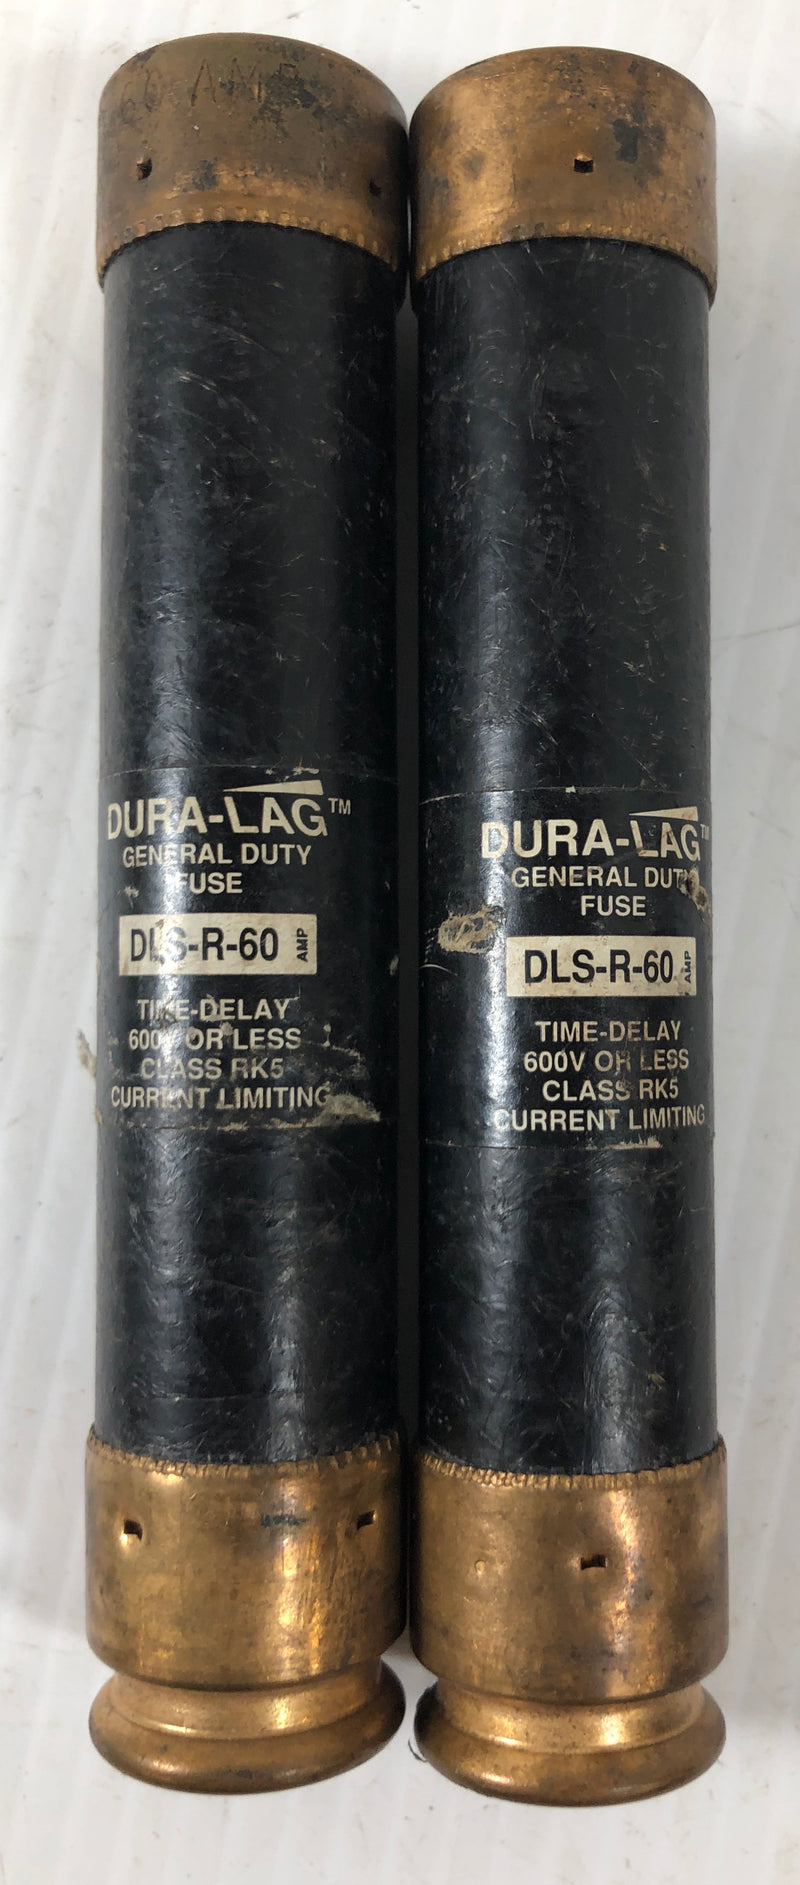 Dura-Lag General Duty Fuse DLS-R-60 (Lot of 2)